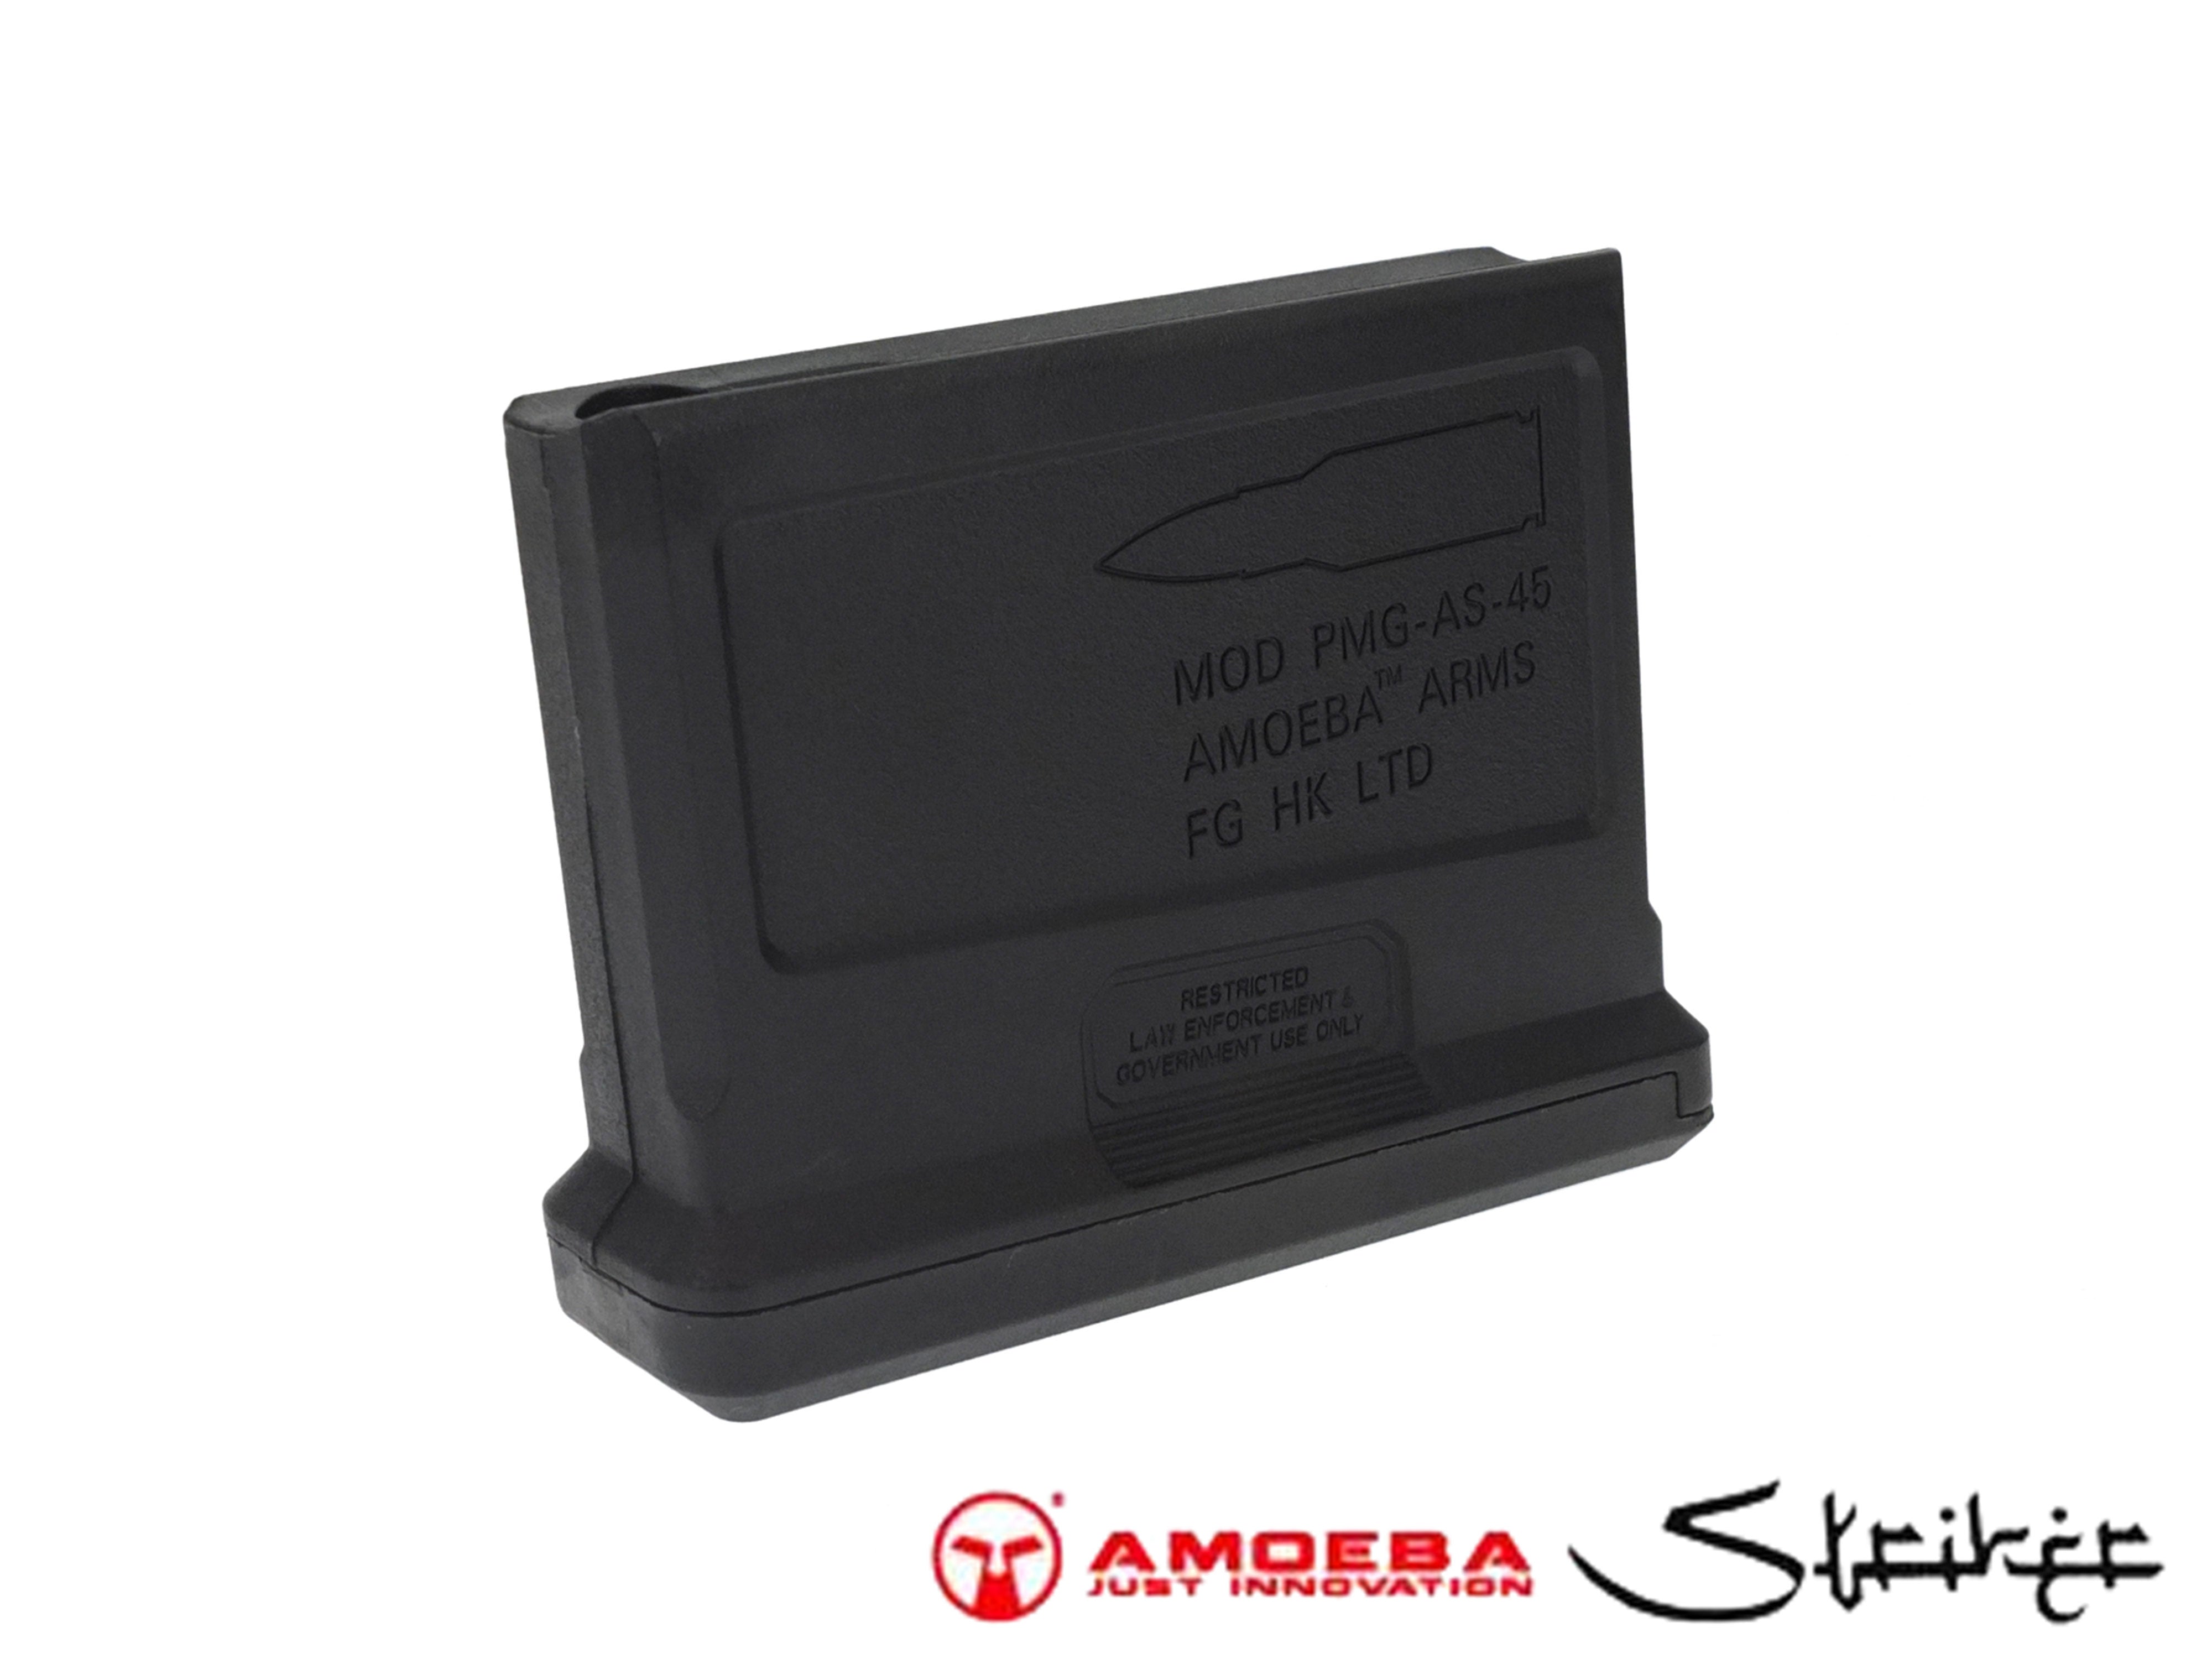 ARES AMOEBA ストライカー AS01/AS02/AS03用 ショートスペアマガジン 